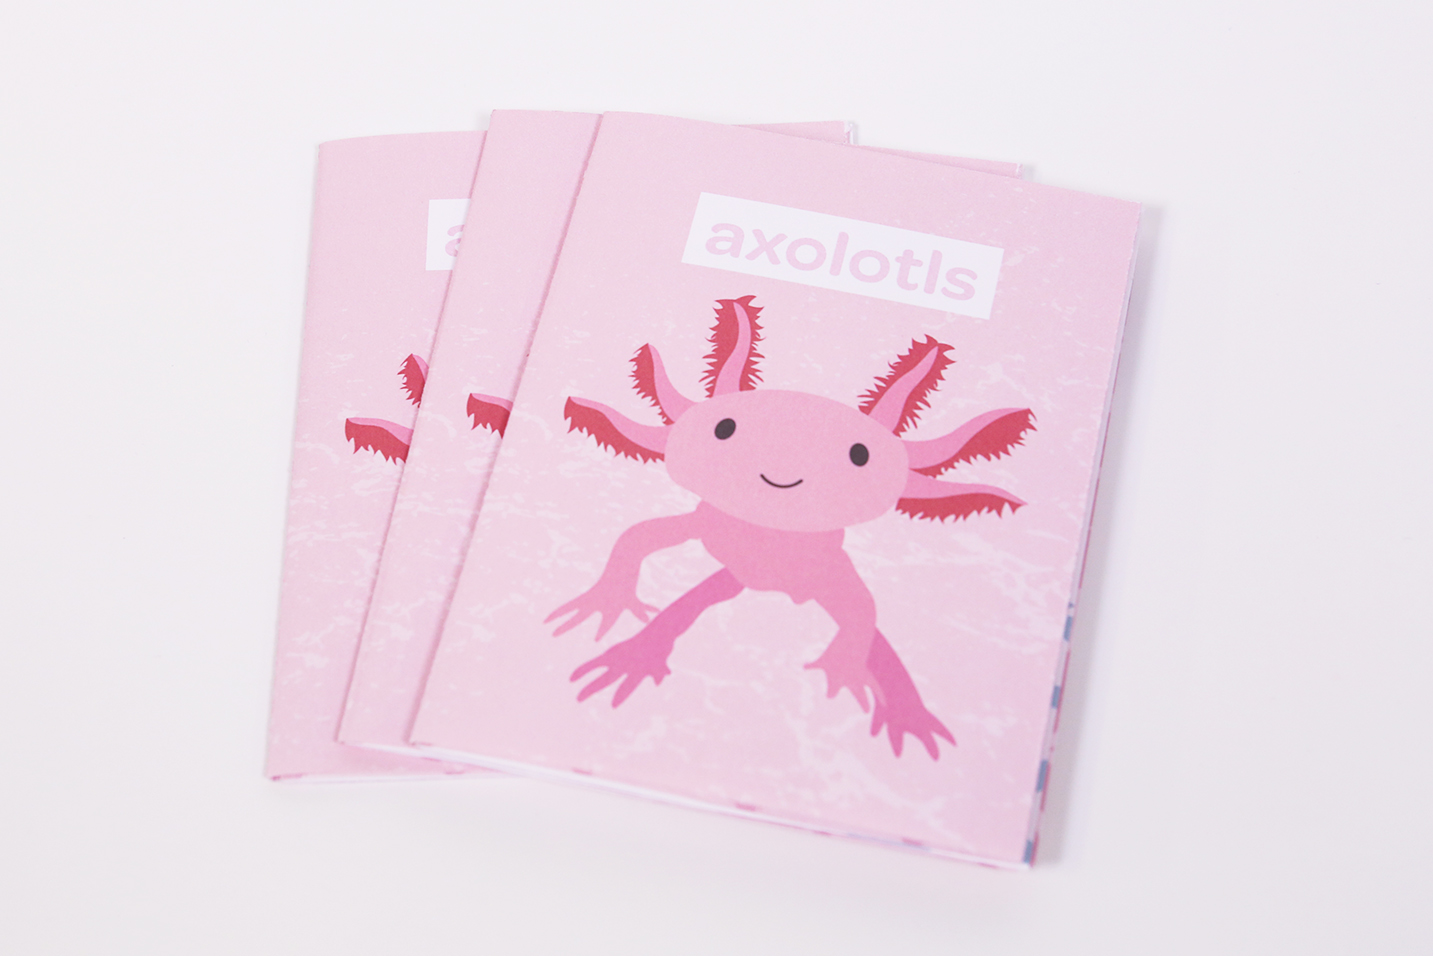 Axolotl Zine Cover